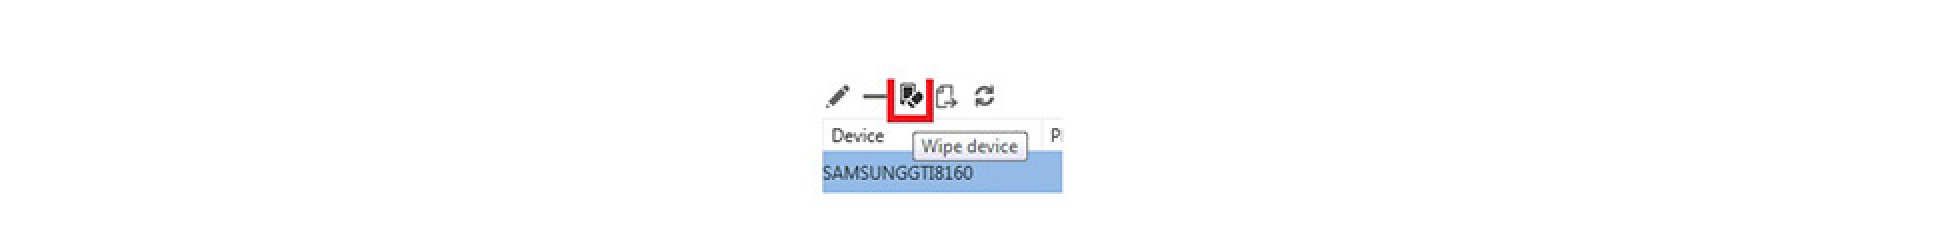 Wipe device screenshot